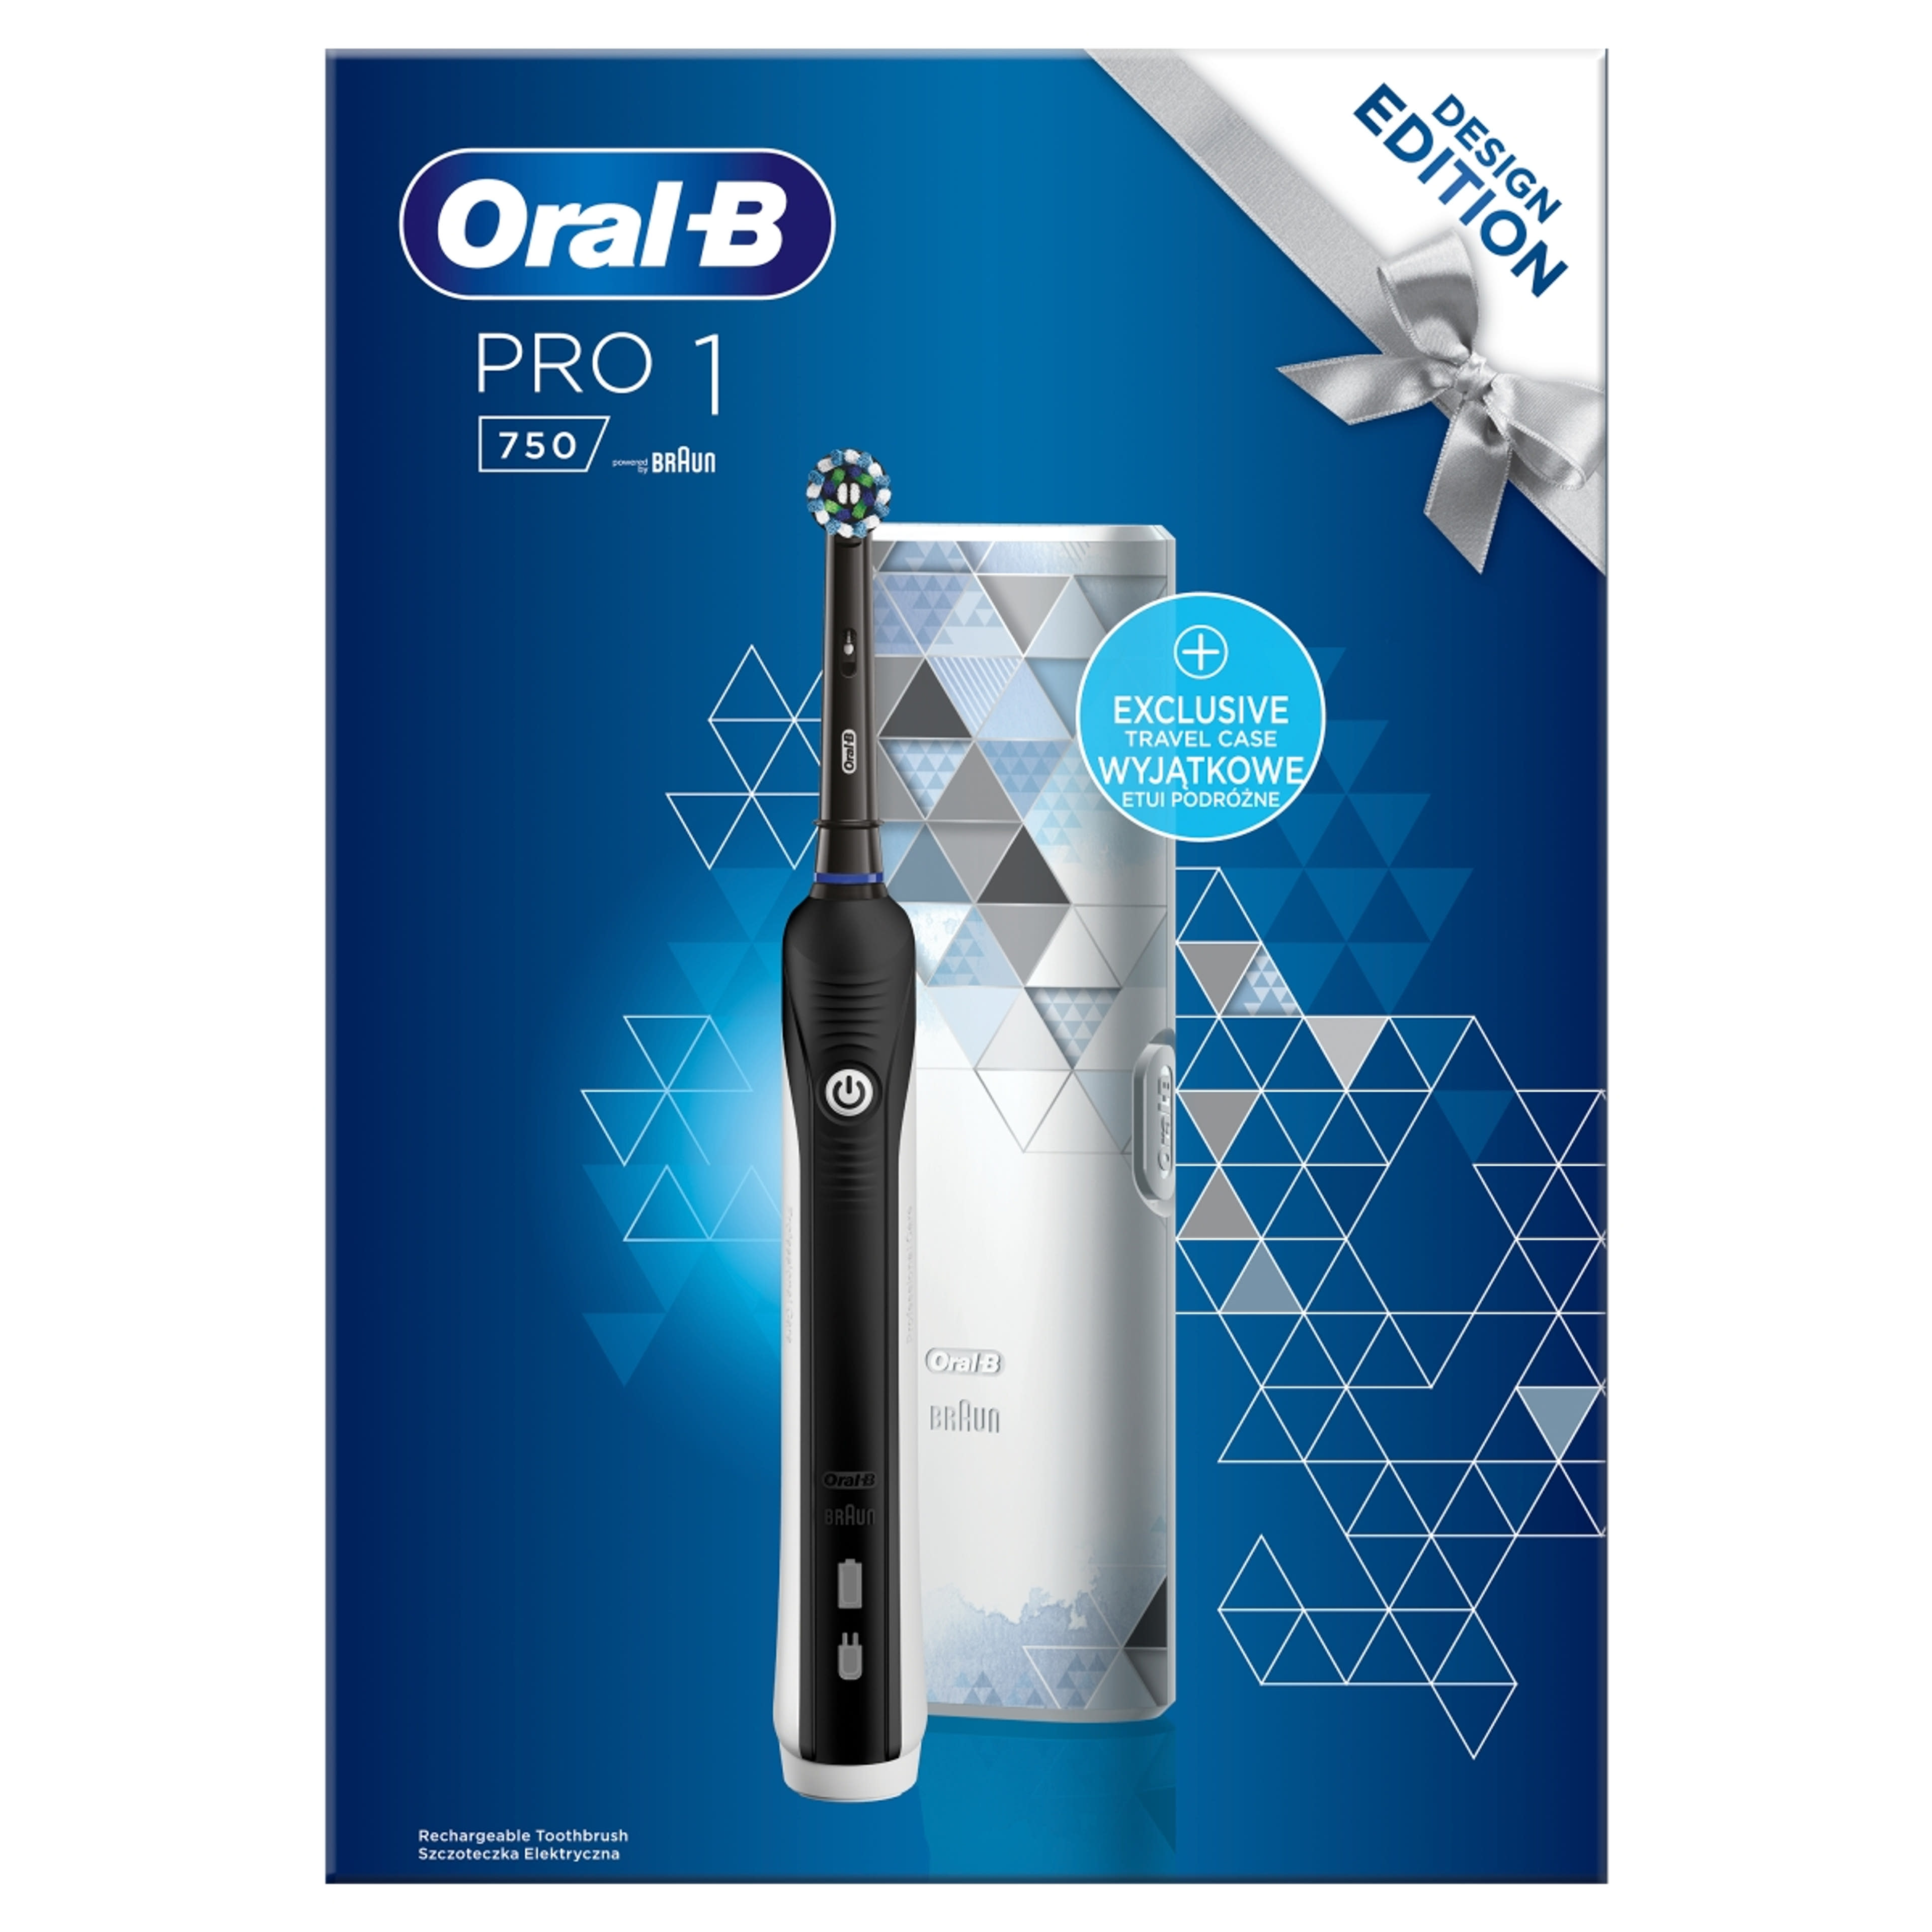 Oral B Pro 750 Design Edition elektromos fogkefe - 1 db